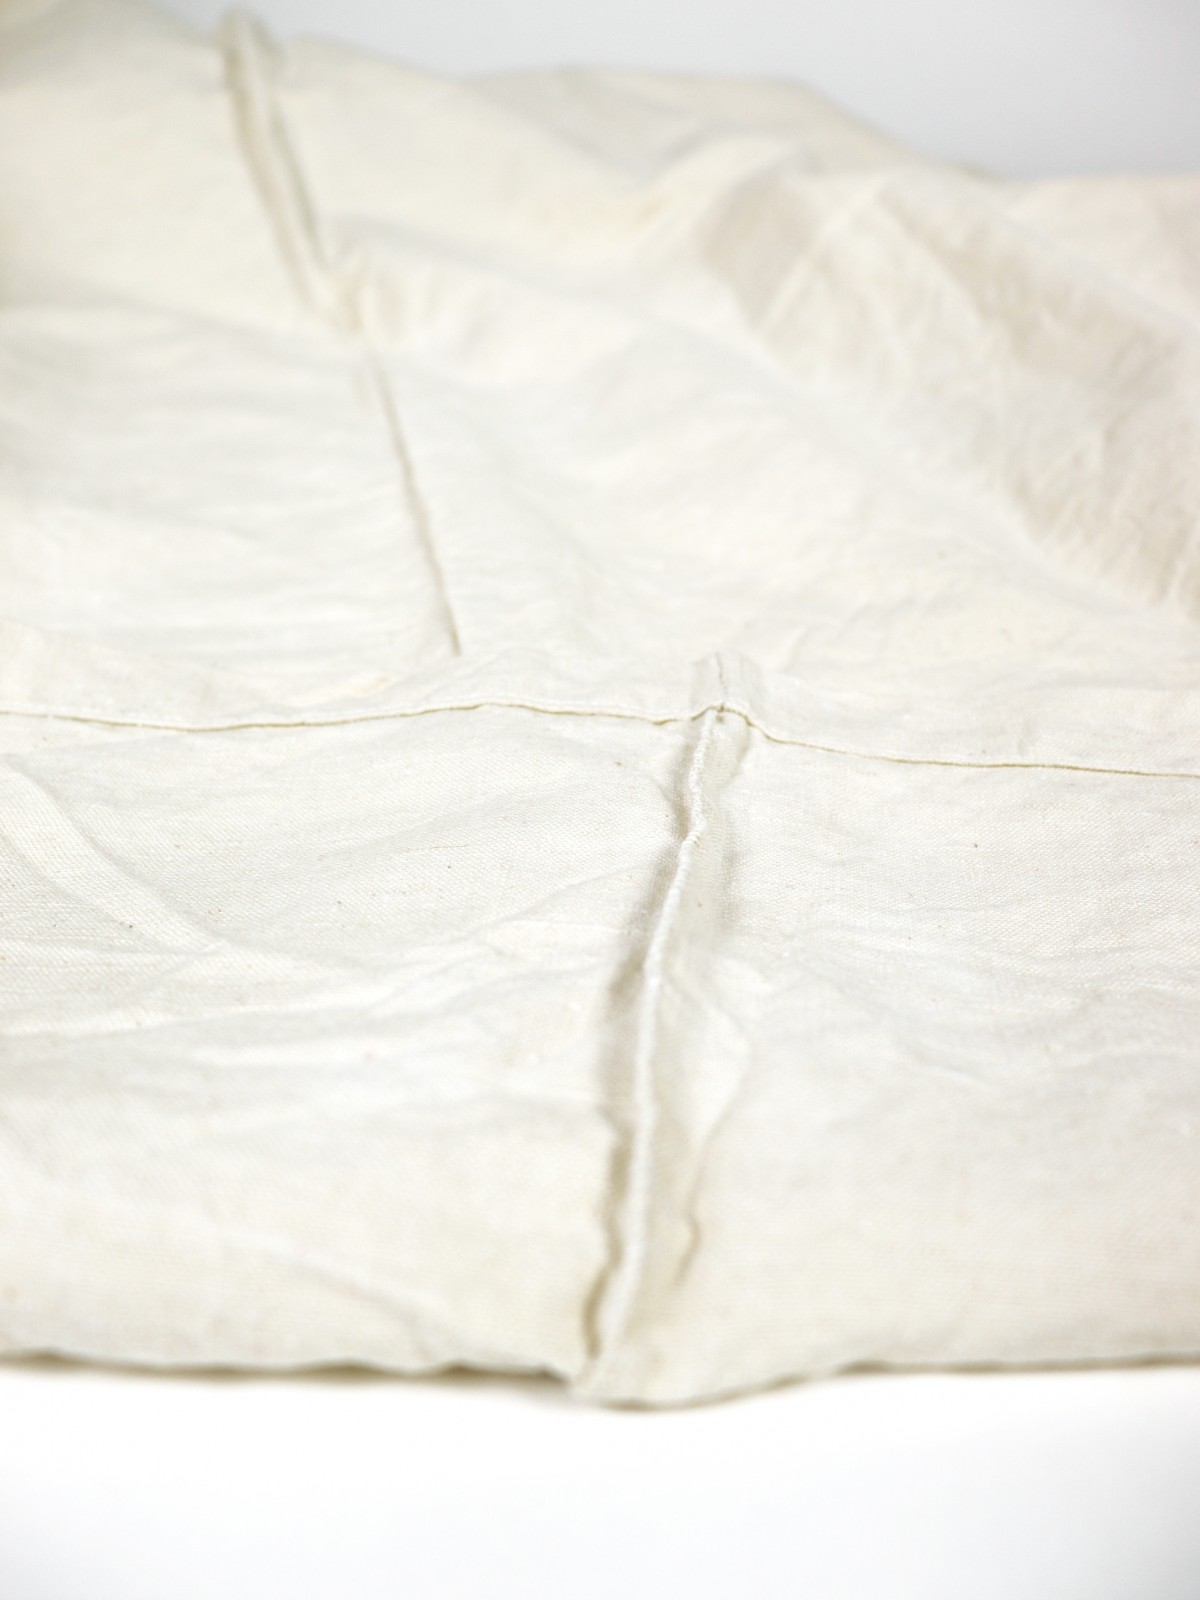 french linen, 1940's, sheet, fabric